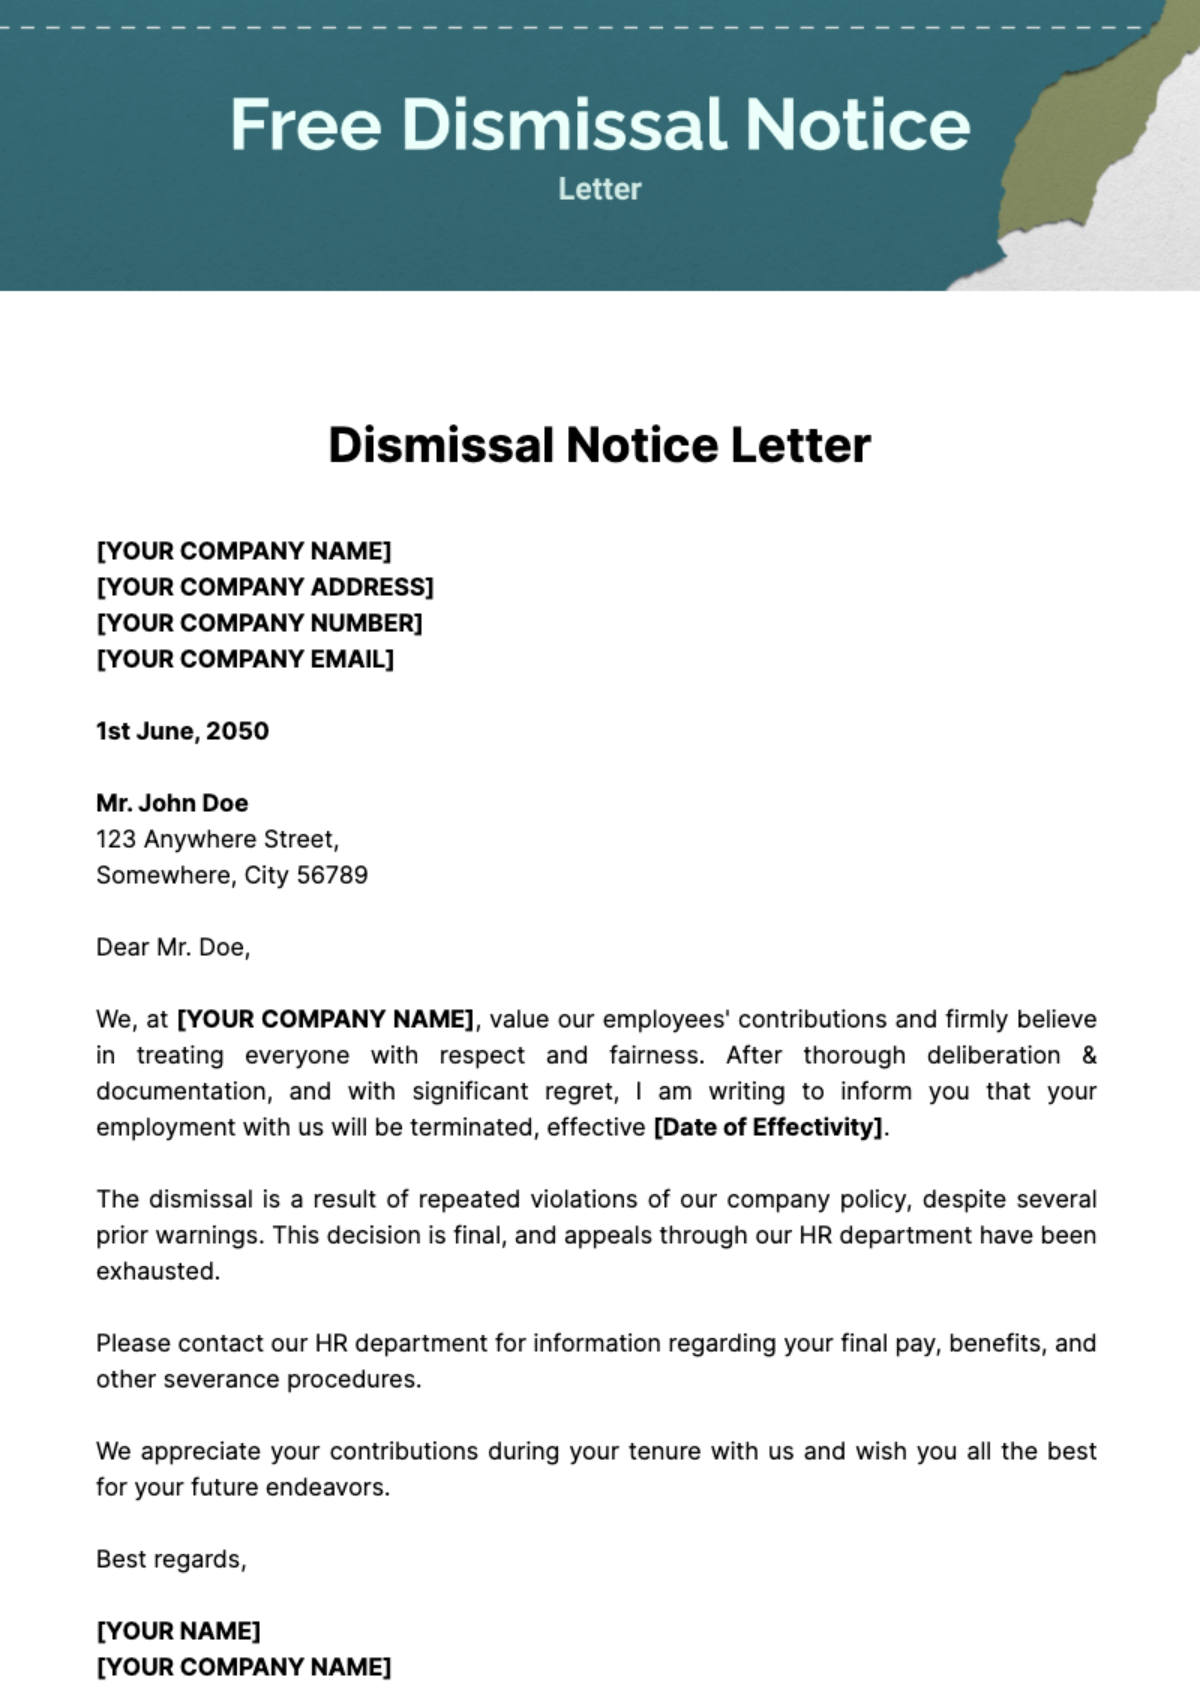 Free Dismissal Notice Letter Template